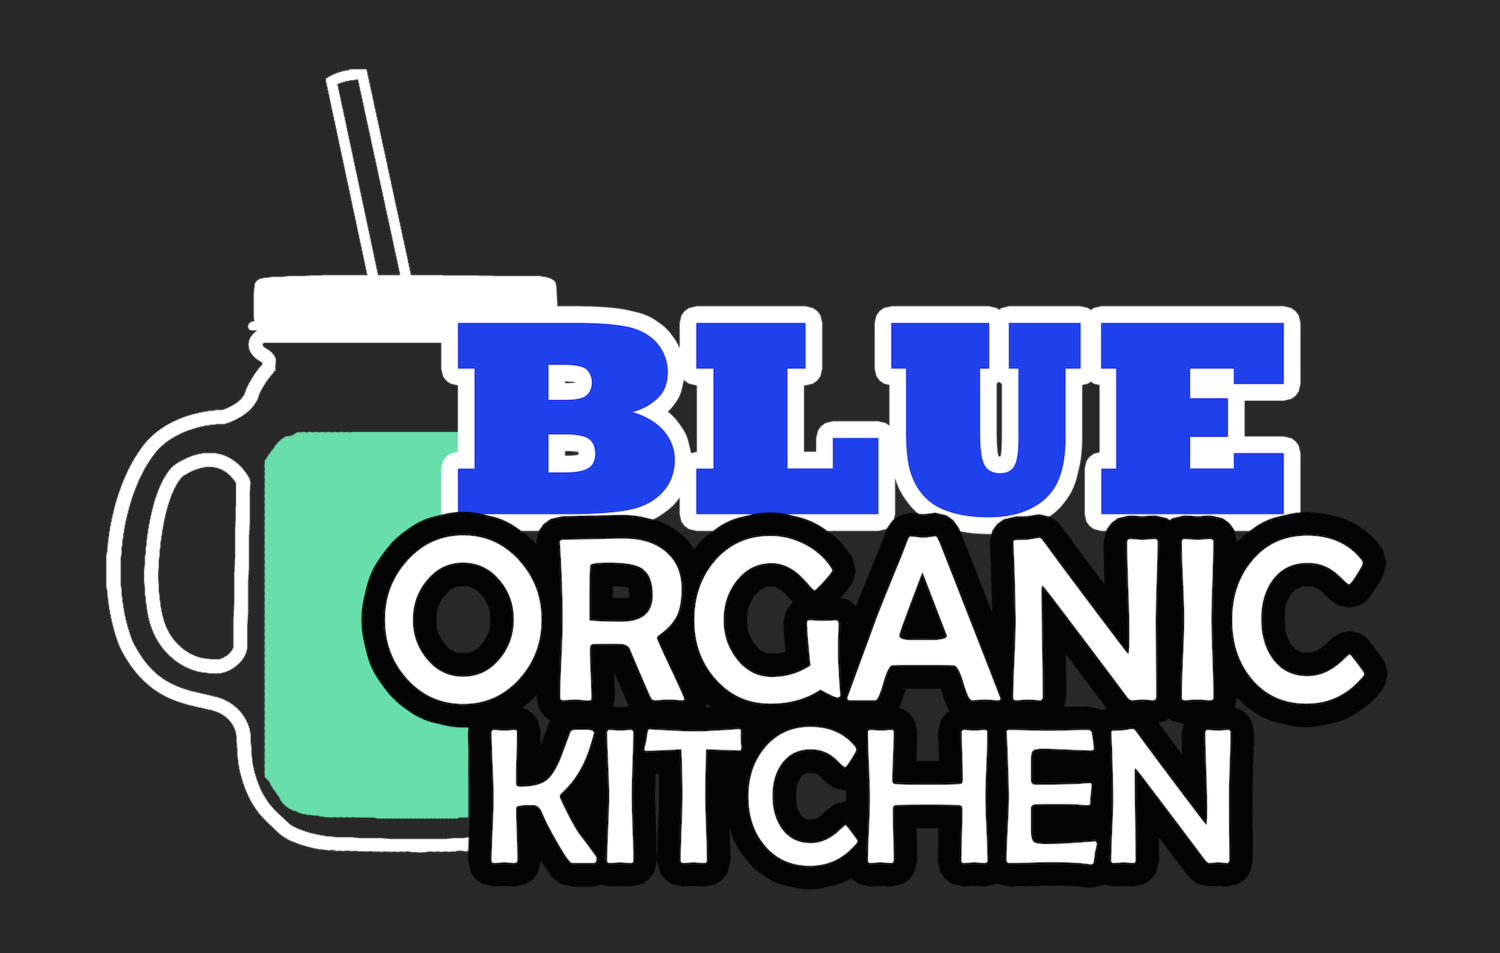 Blue Organic Kitchen